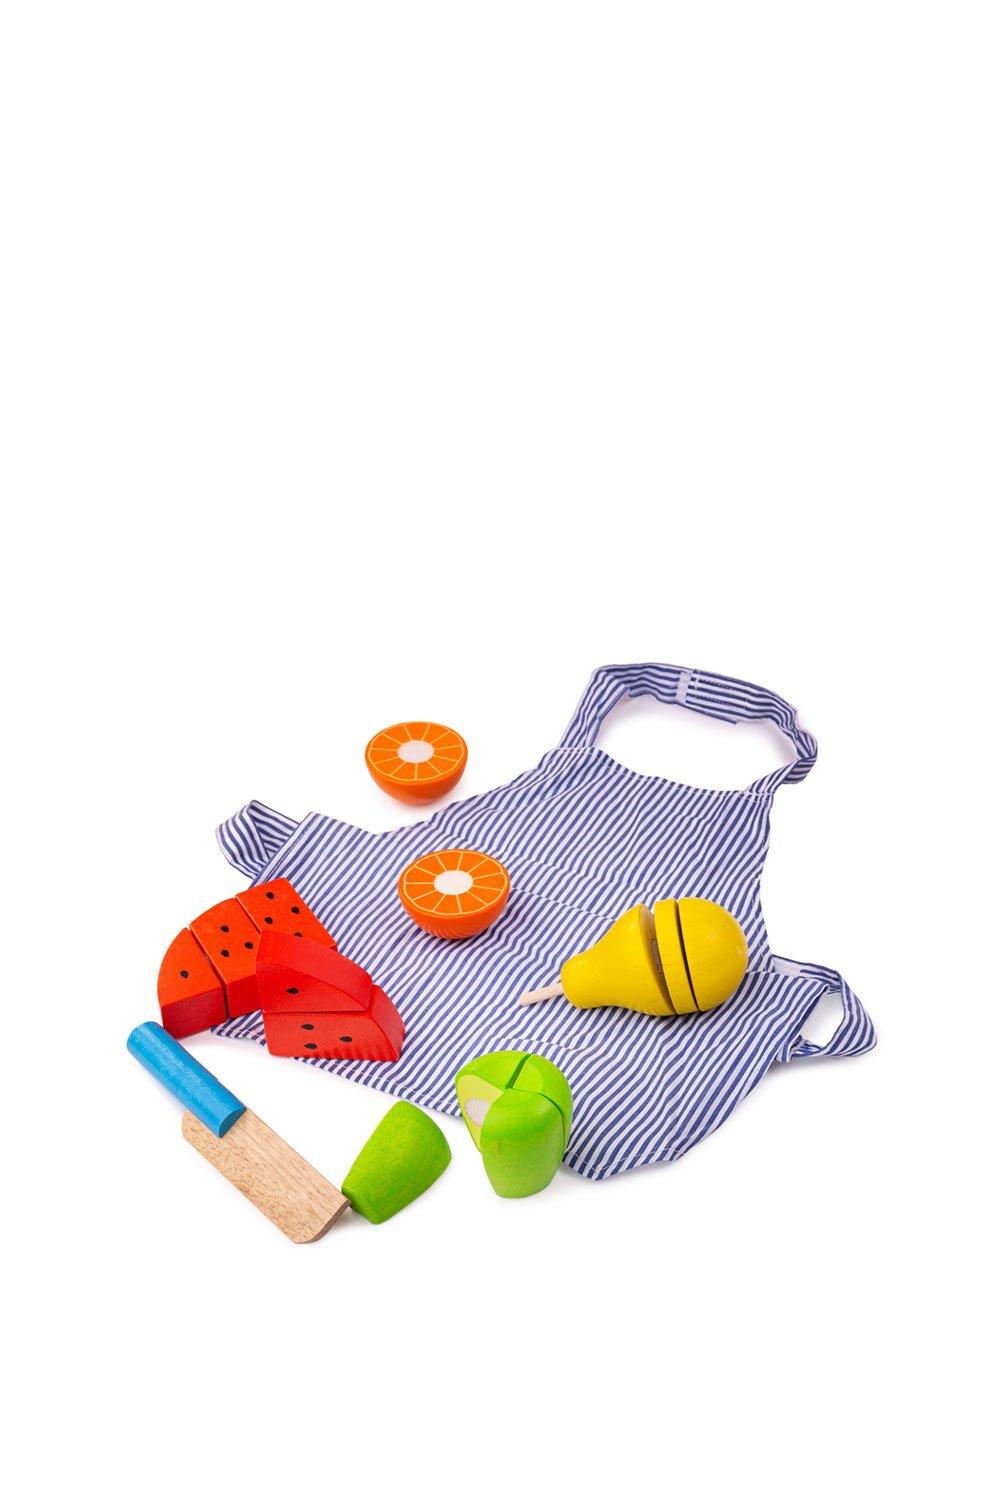 Cutting Toy Fruit Chefs Set